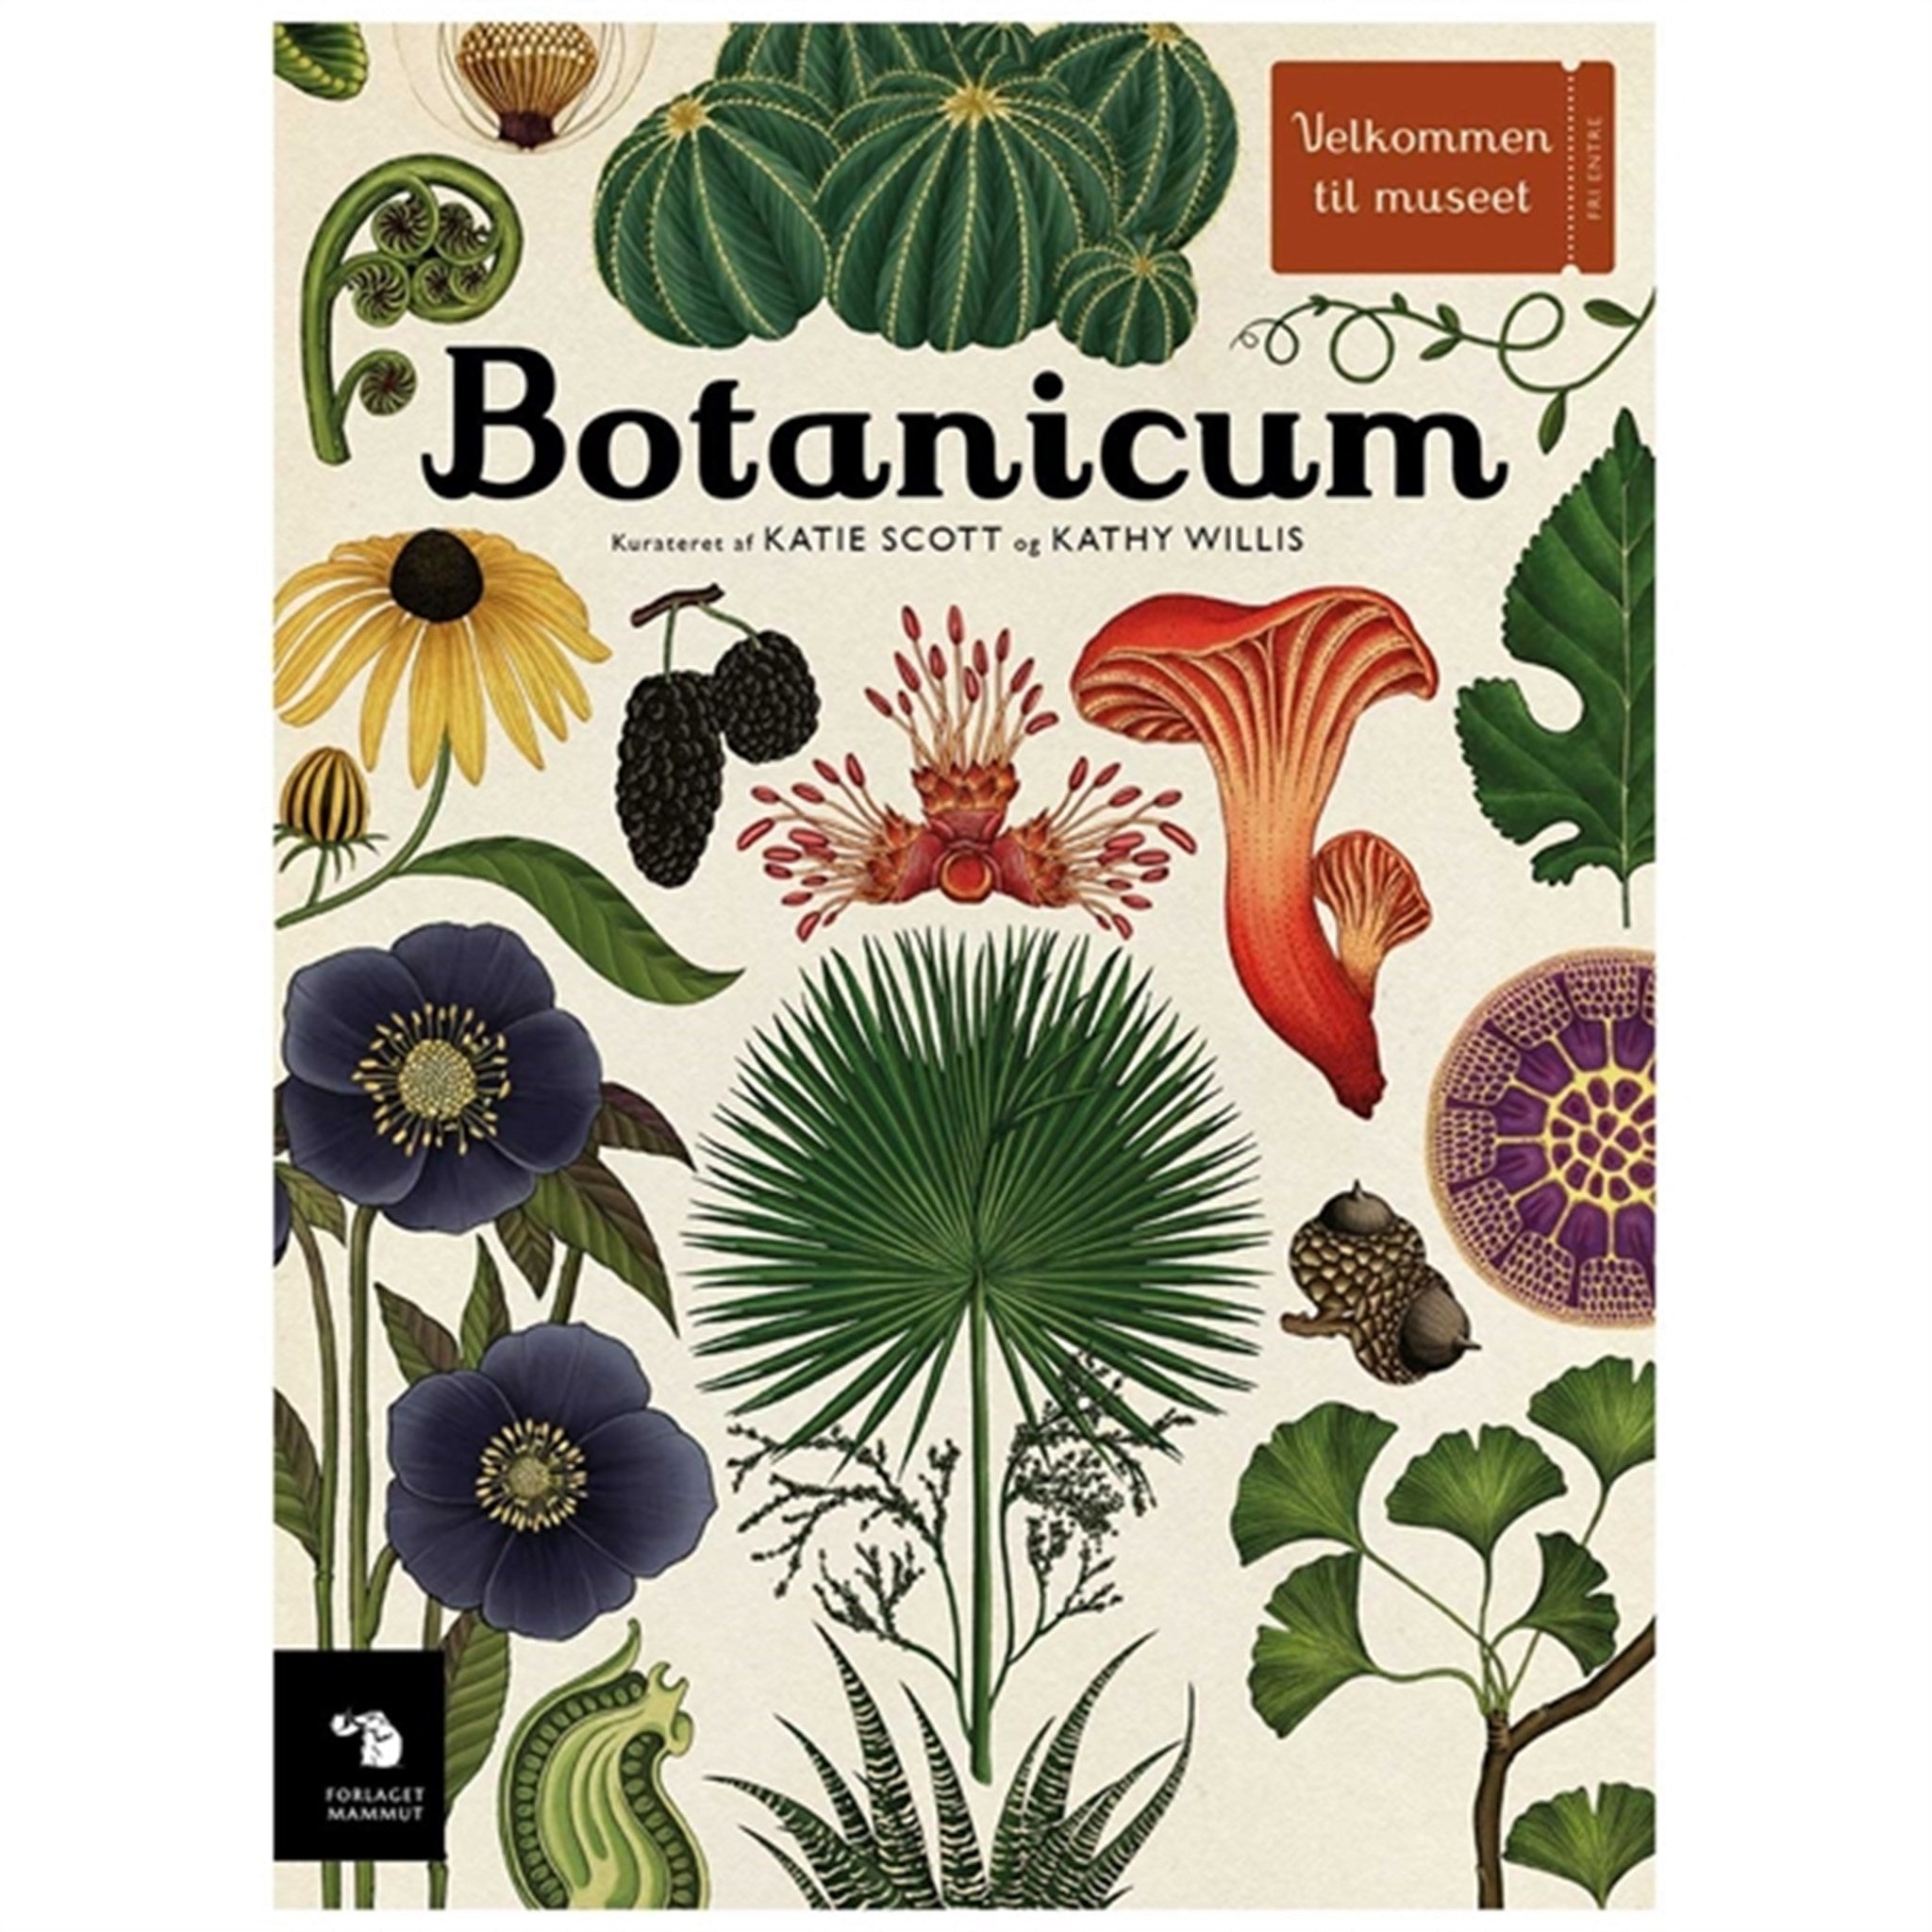 Forlaget Mammut Botanicum